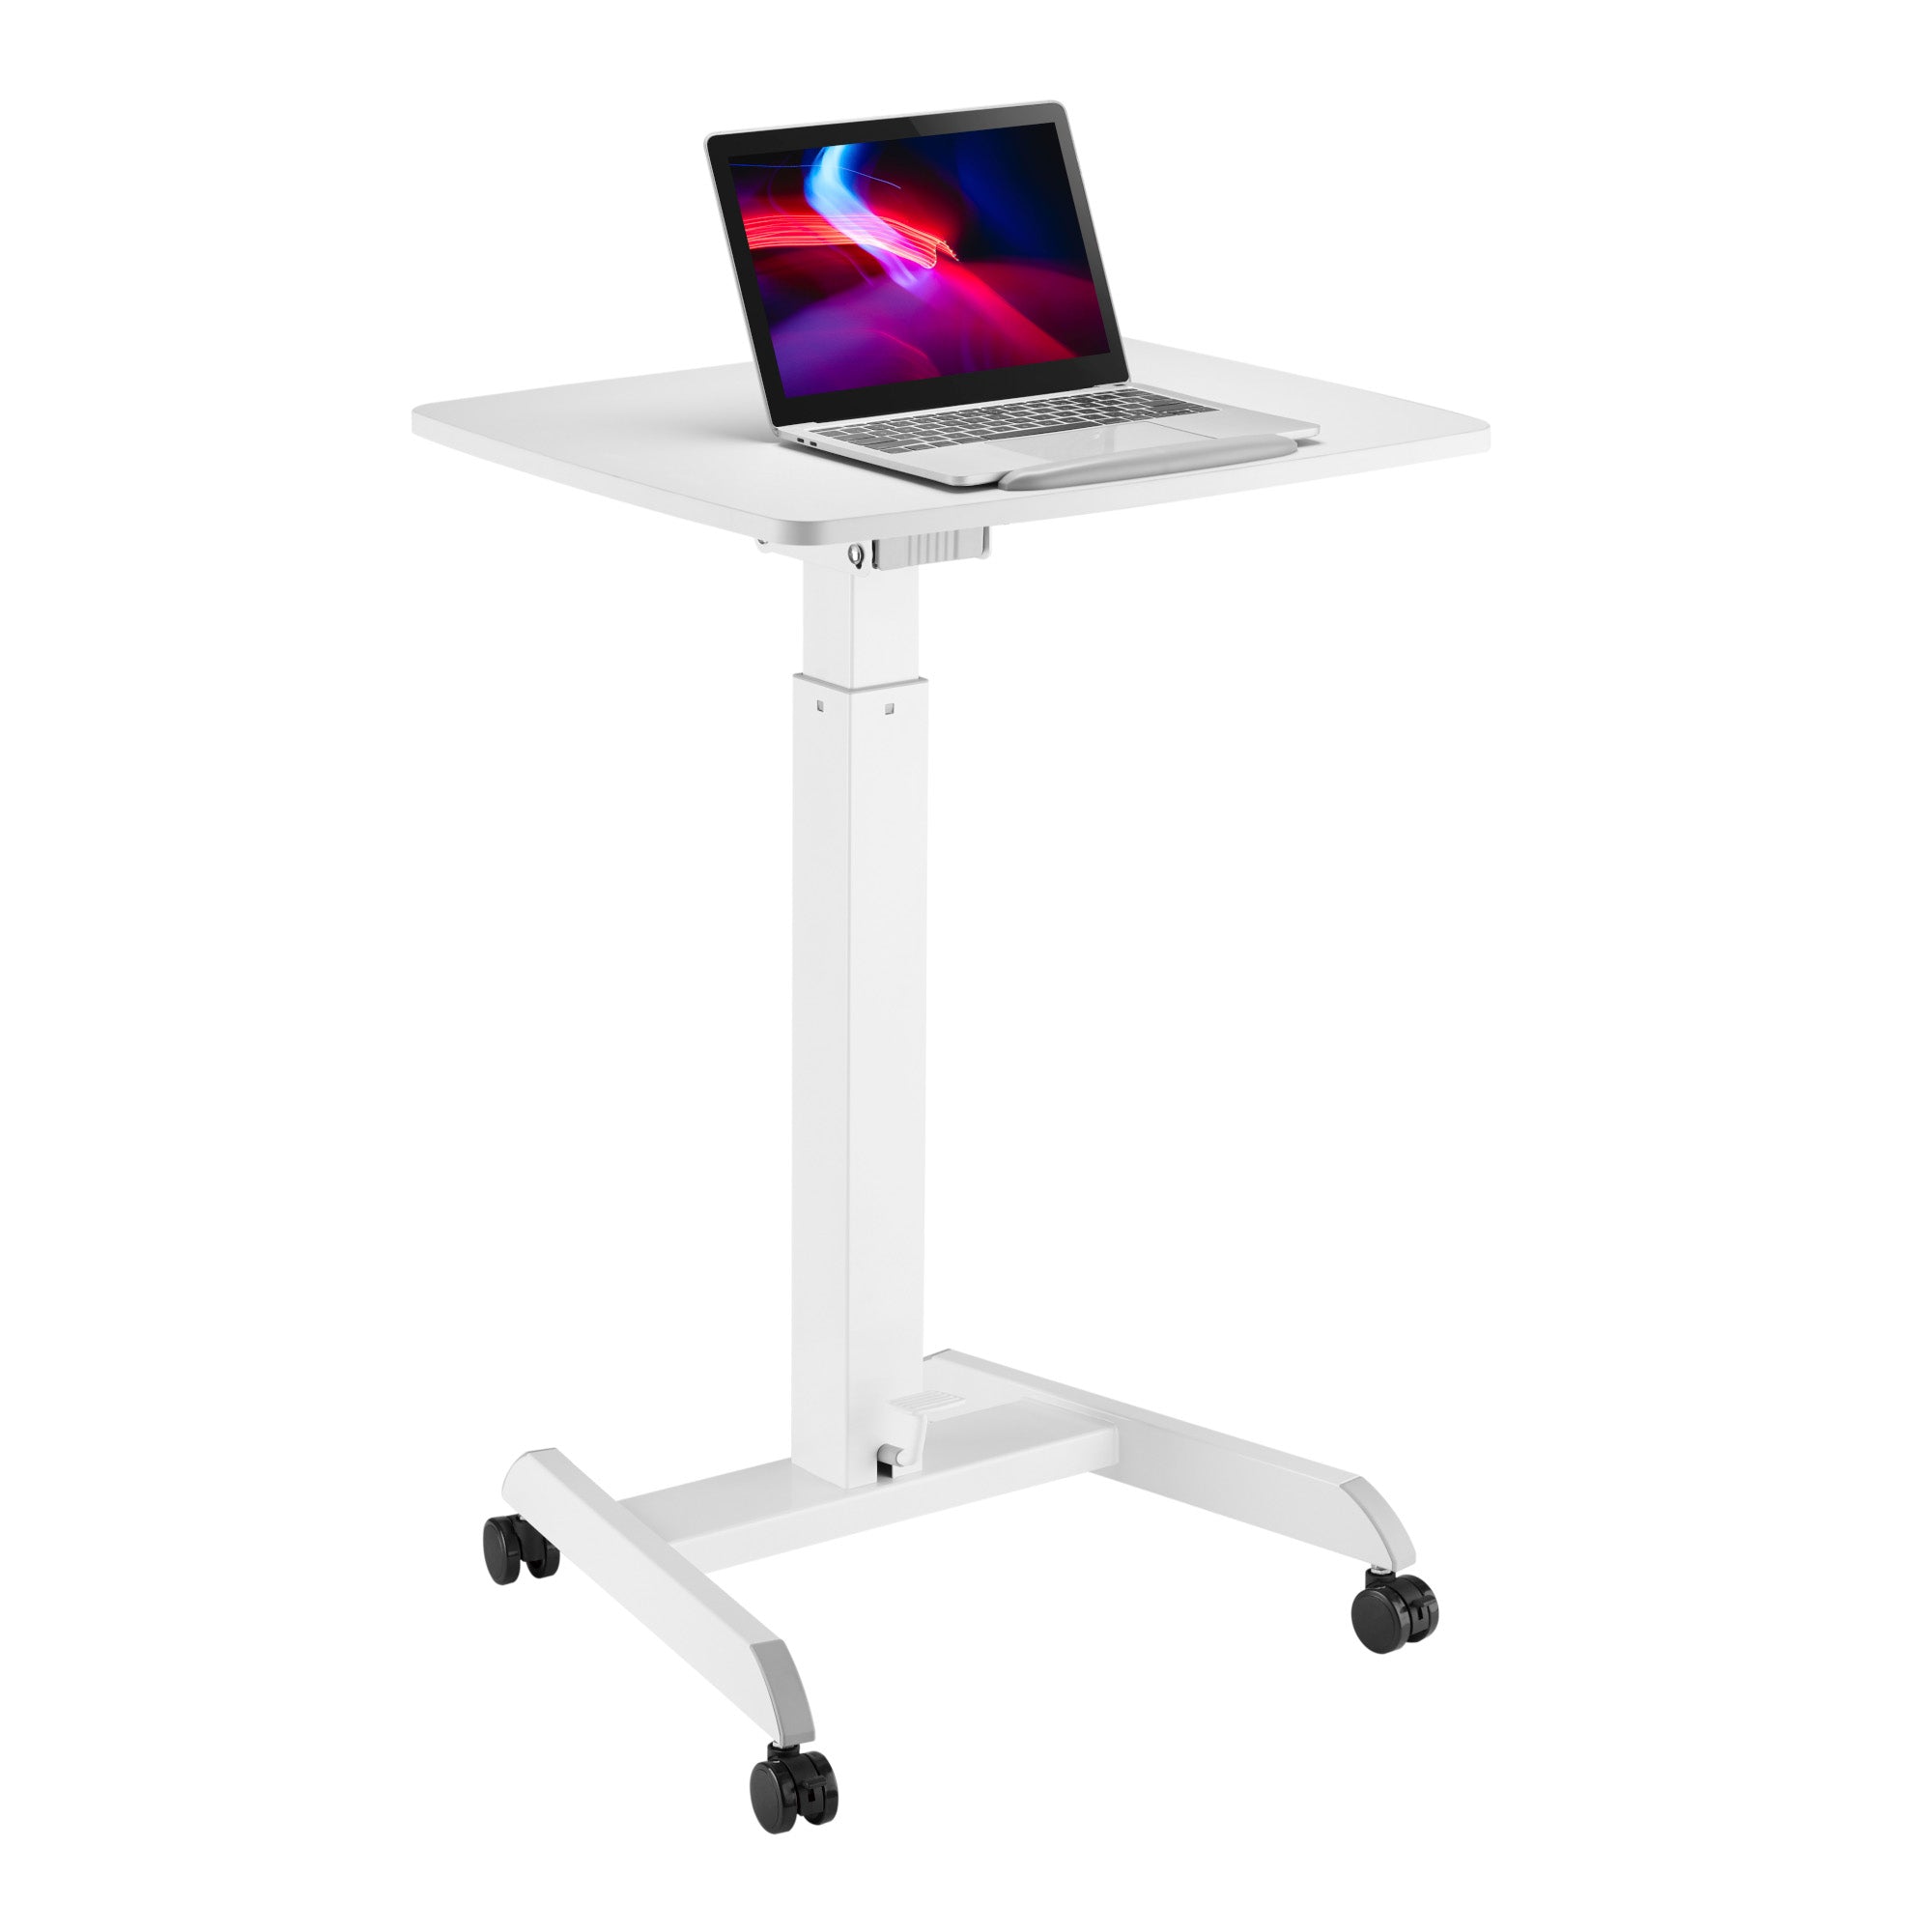 ProperAV Mobile Sit-Stand Desk Workstation - White